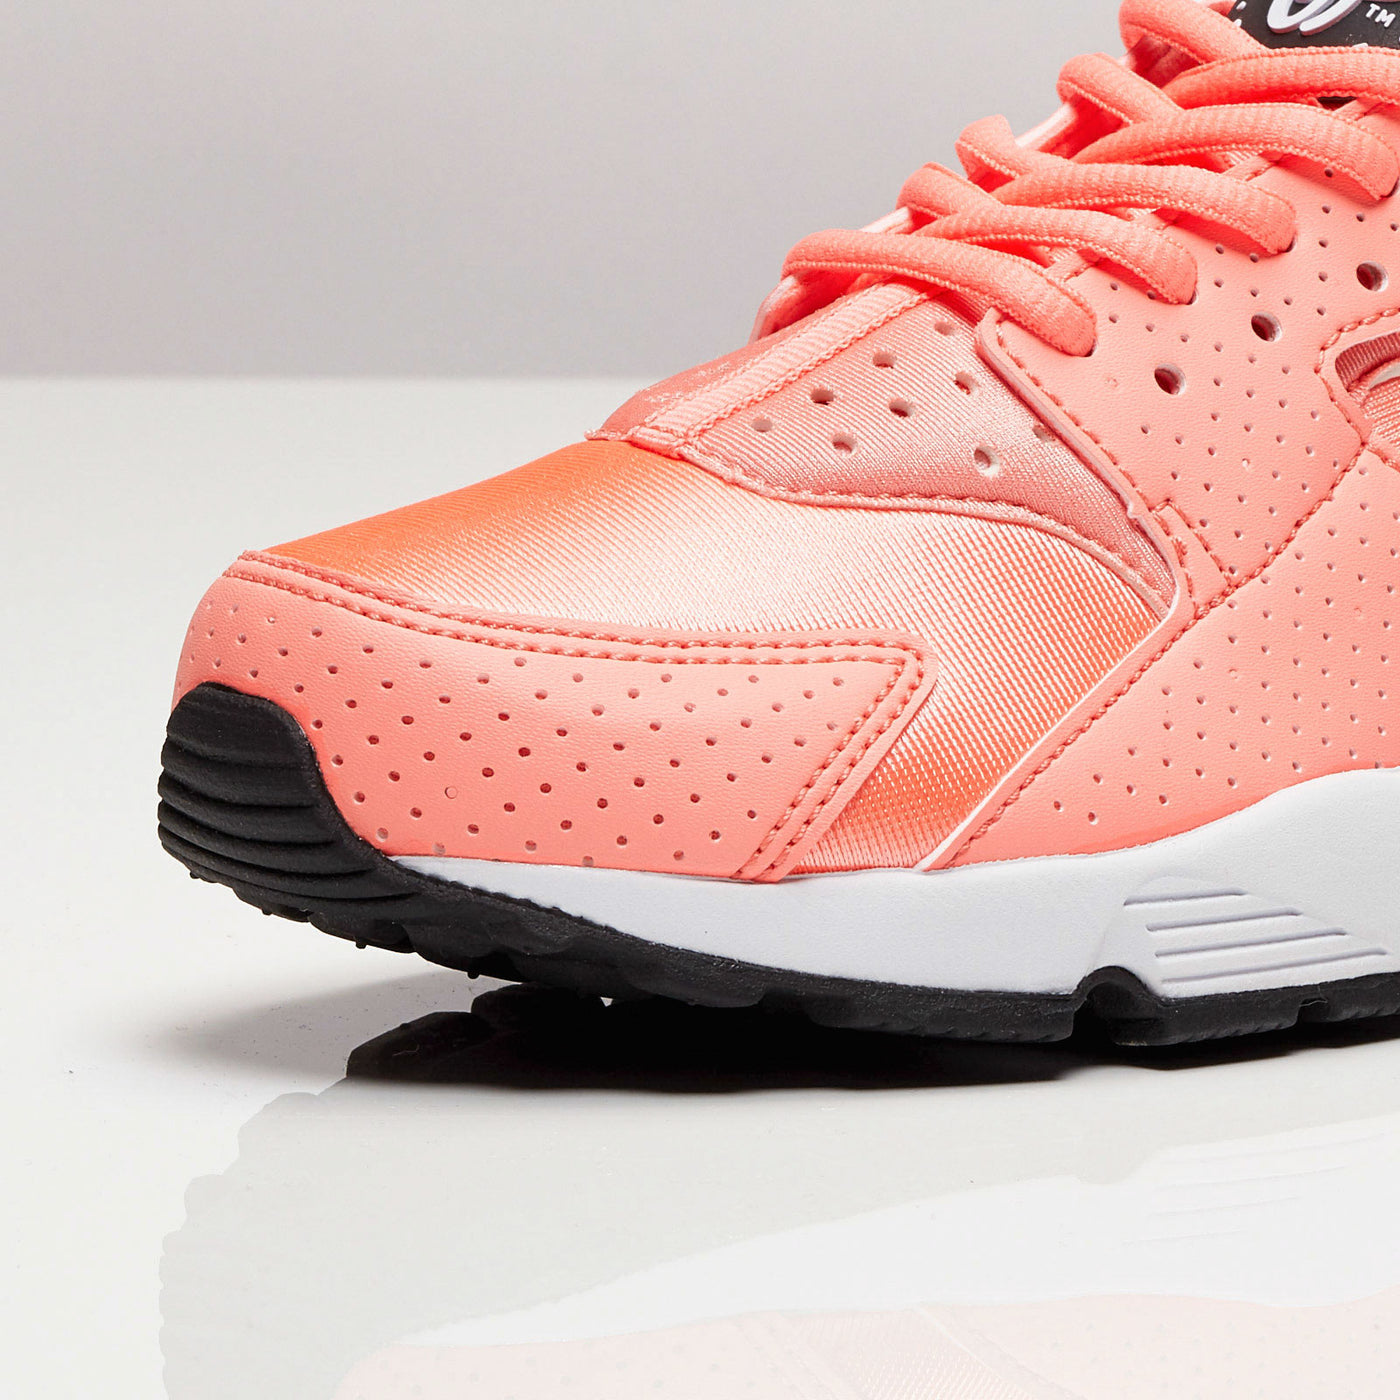 Women Nike Air Huarache Atomic Pink